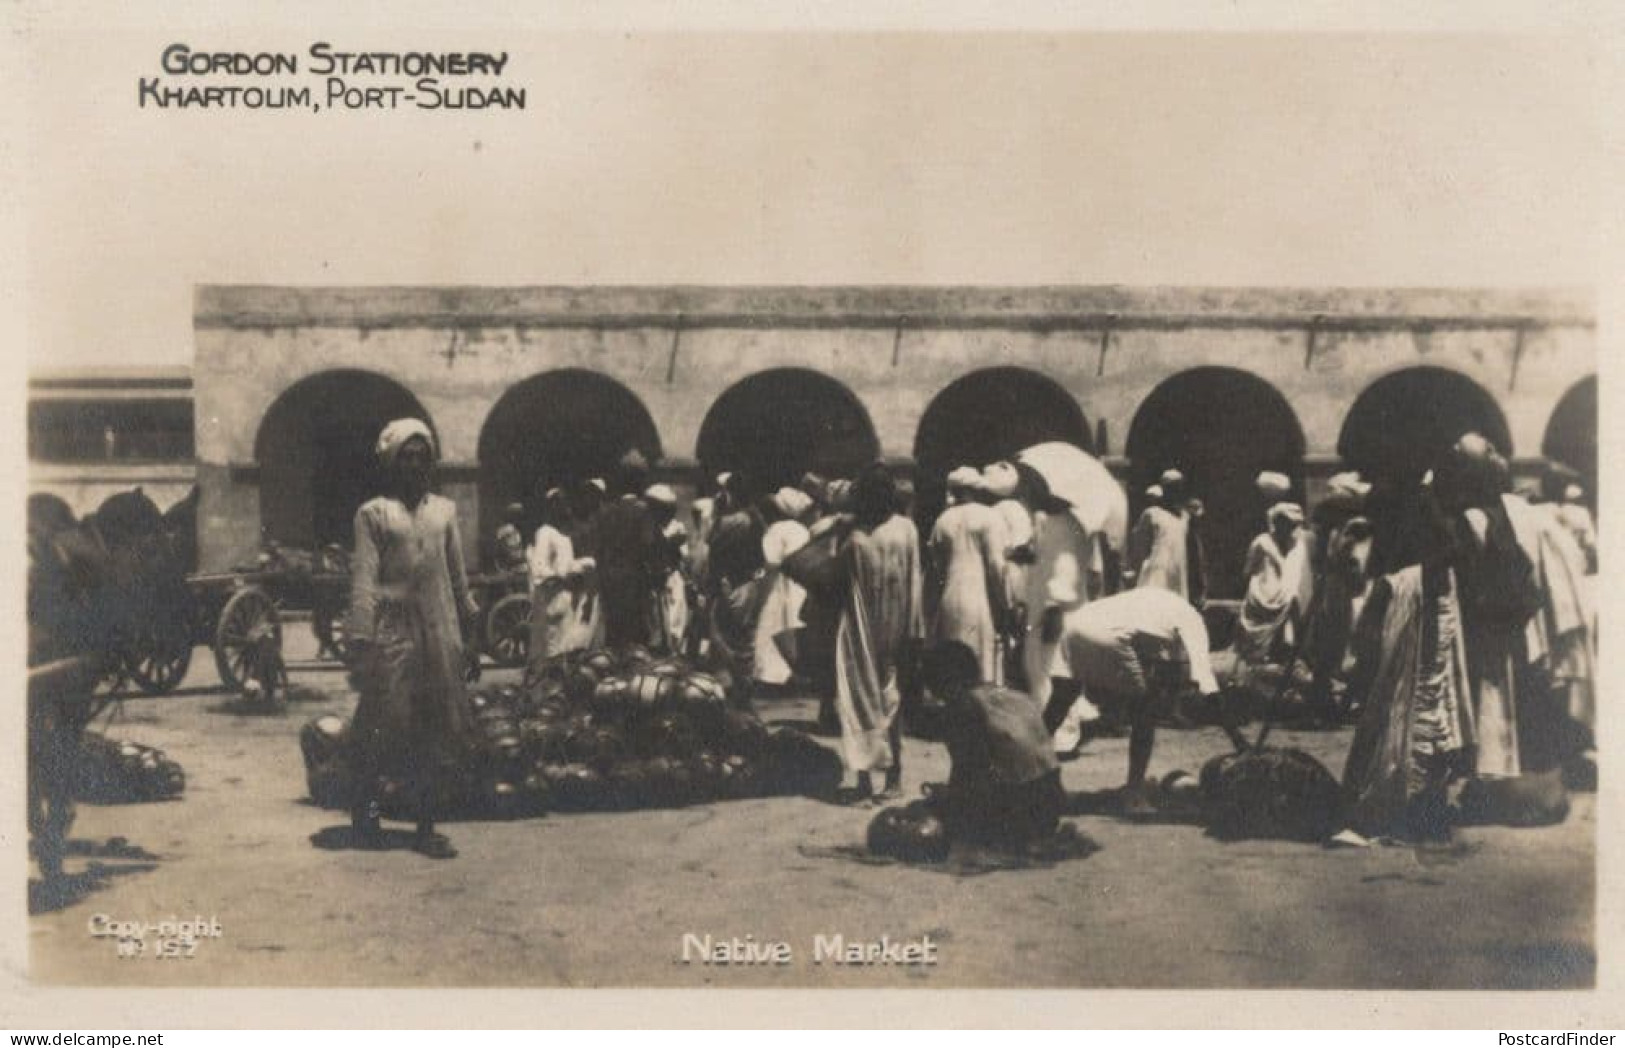 Gordon Stationary Khartoum Port Sudan Advertising Old Postcard - Südafrika